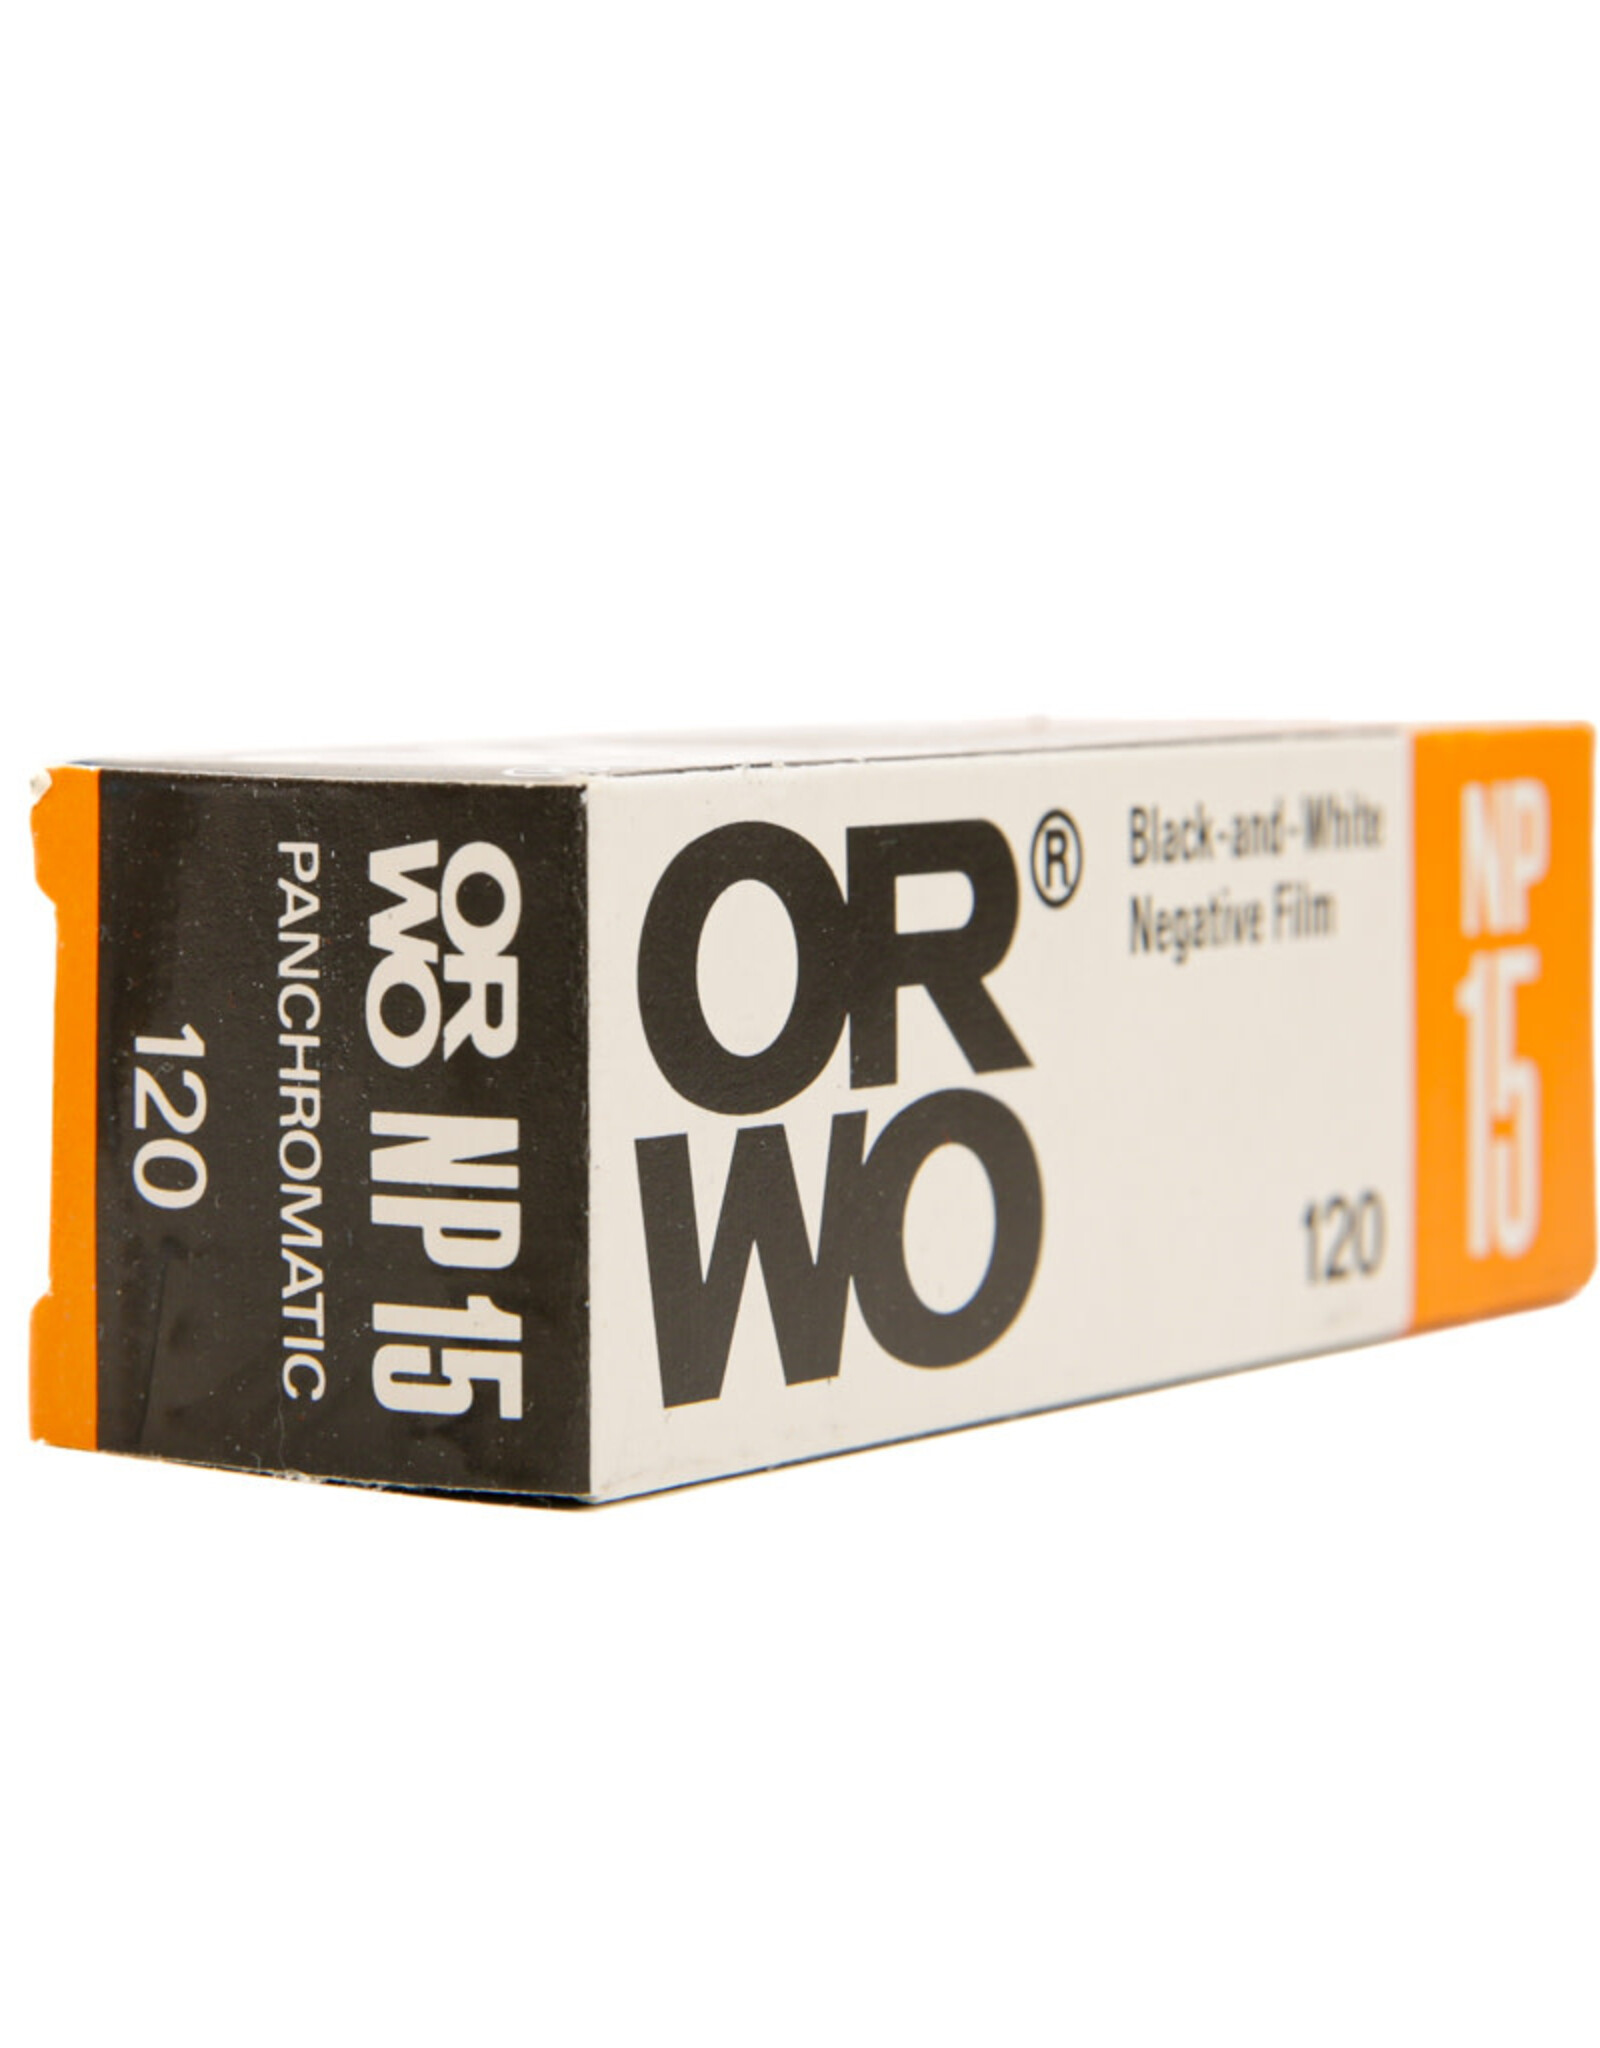 ORWO ORWO NP15 Panchromatic ISO 25 120 Film expired 04/83, kept frozen